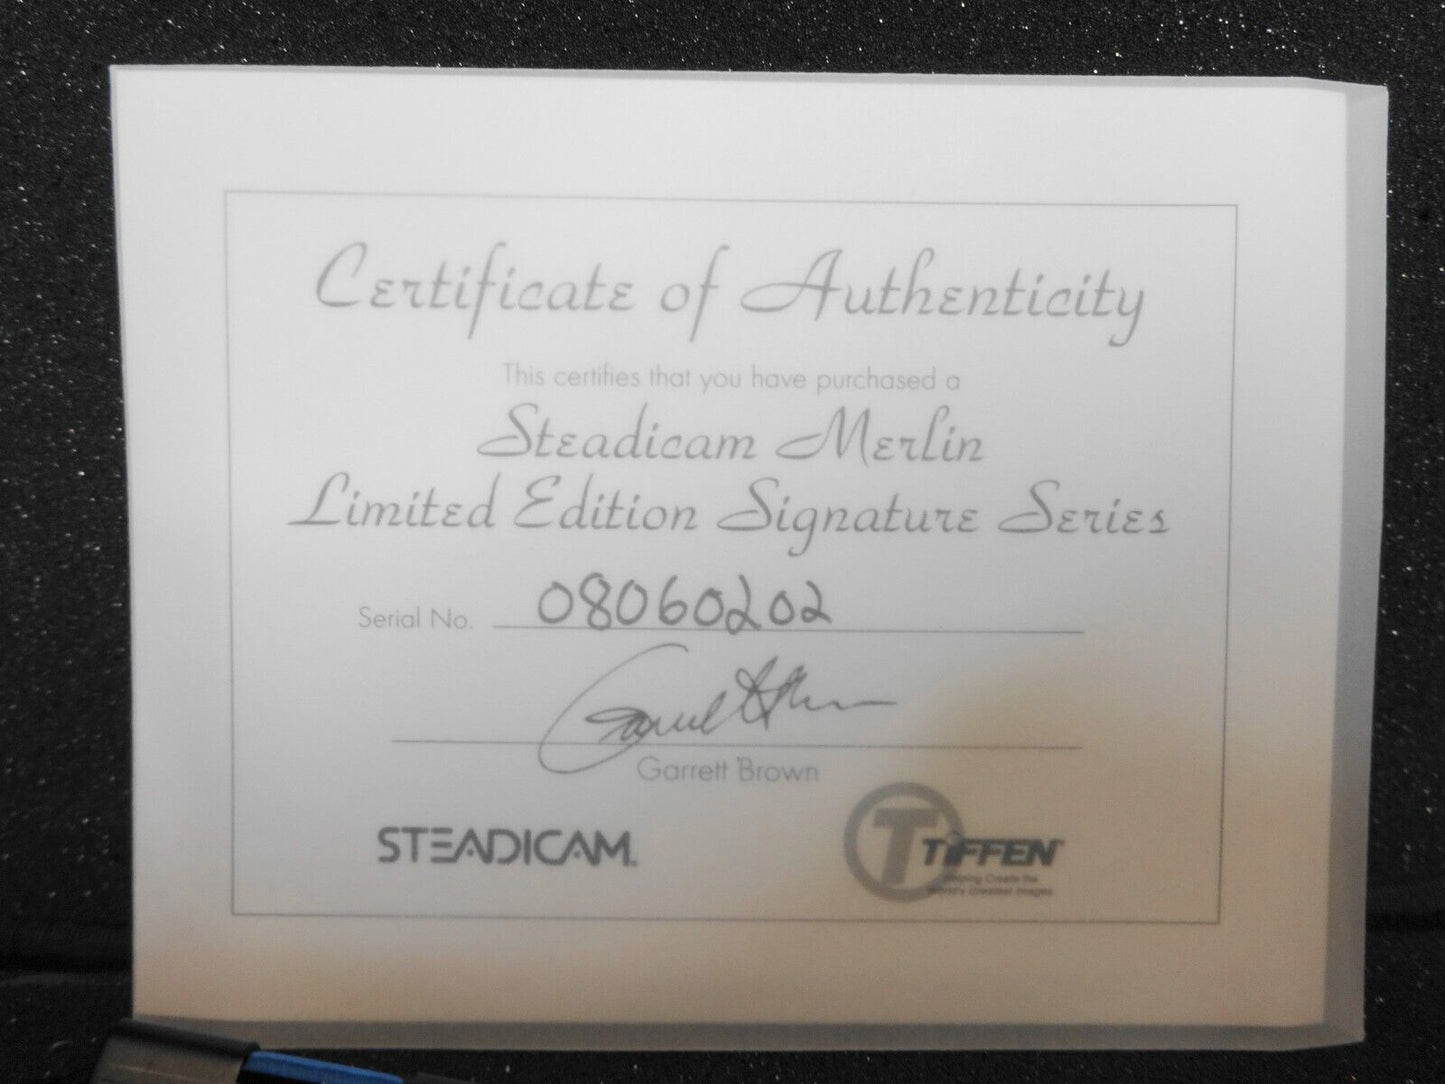 Steadycam Merlin Camera Stabilizing System